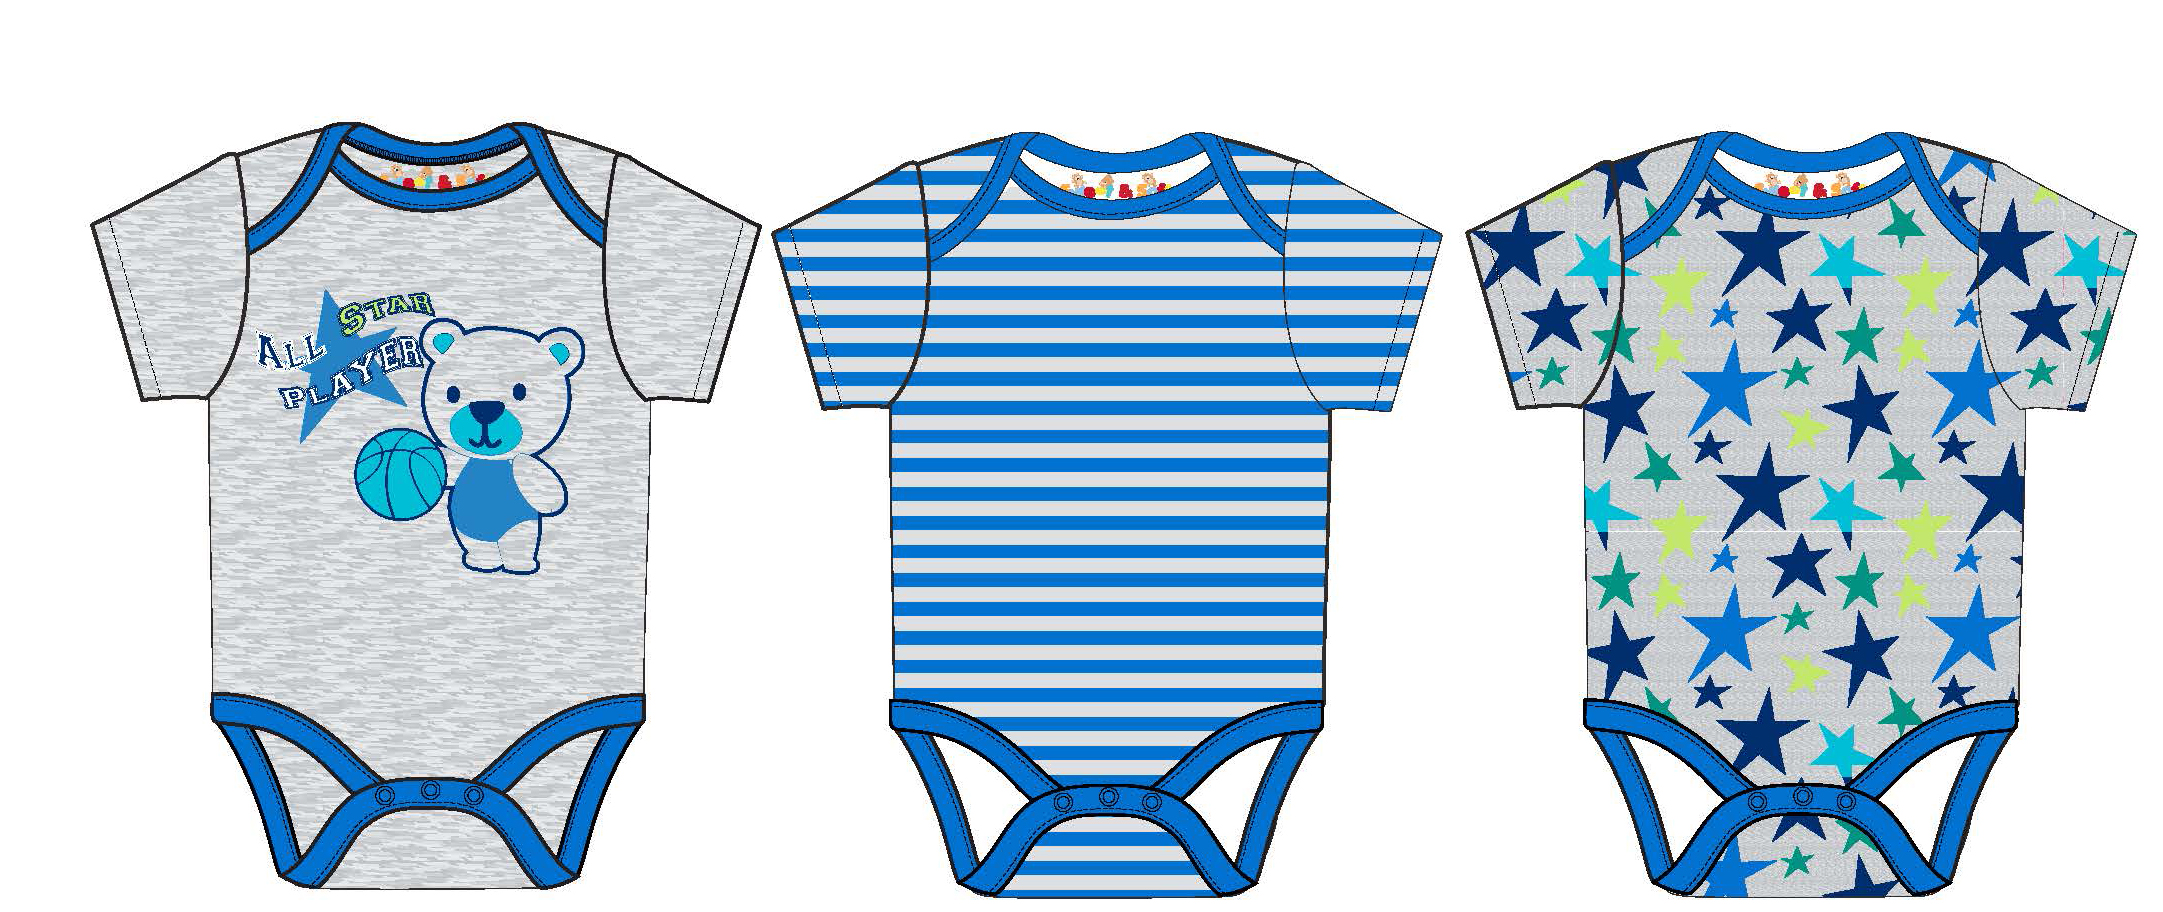 Baby Boy's Printed Short-Sleeve Onesie w/ Striped & All Star Bear Print - Sizes 12M-24M